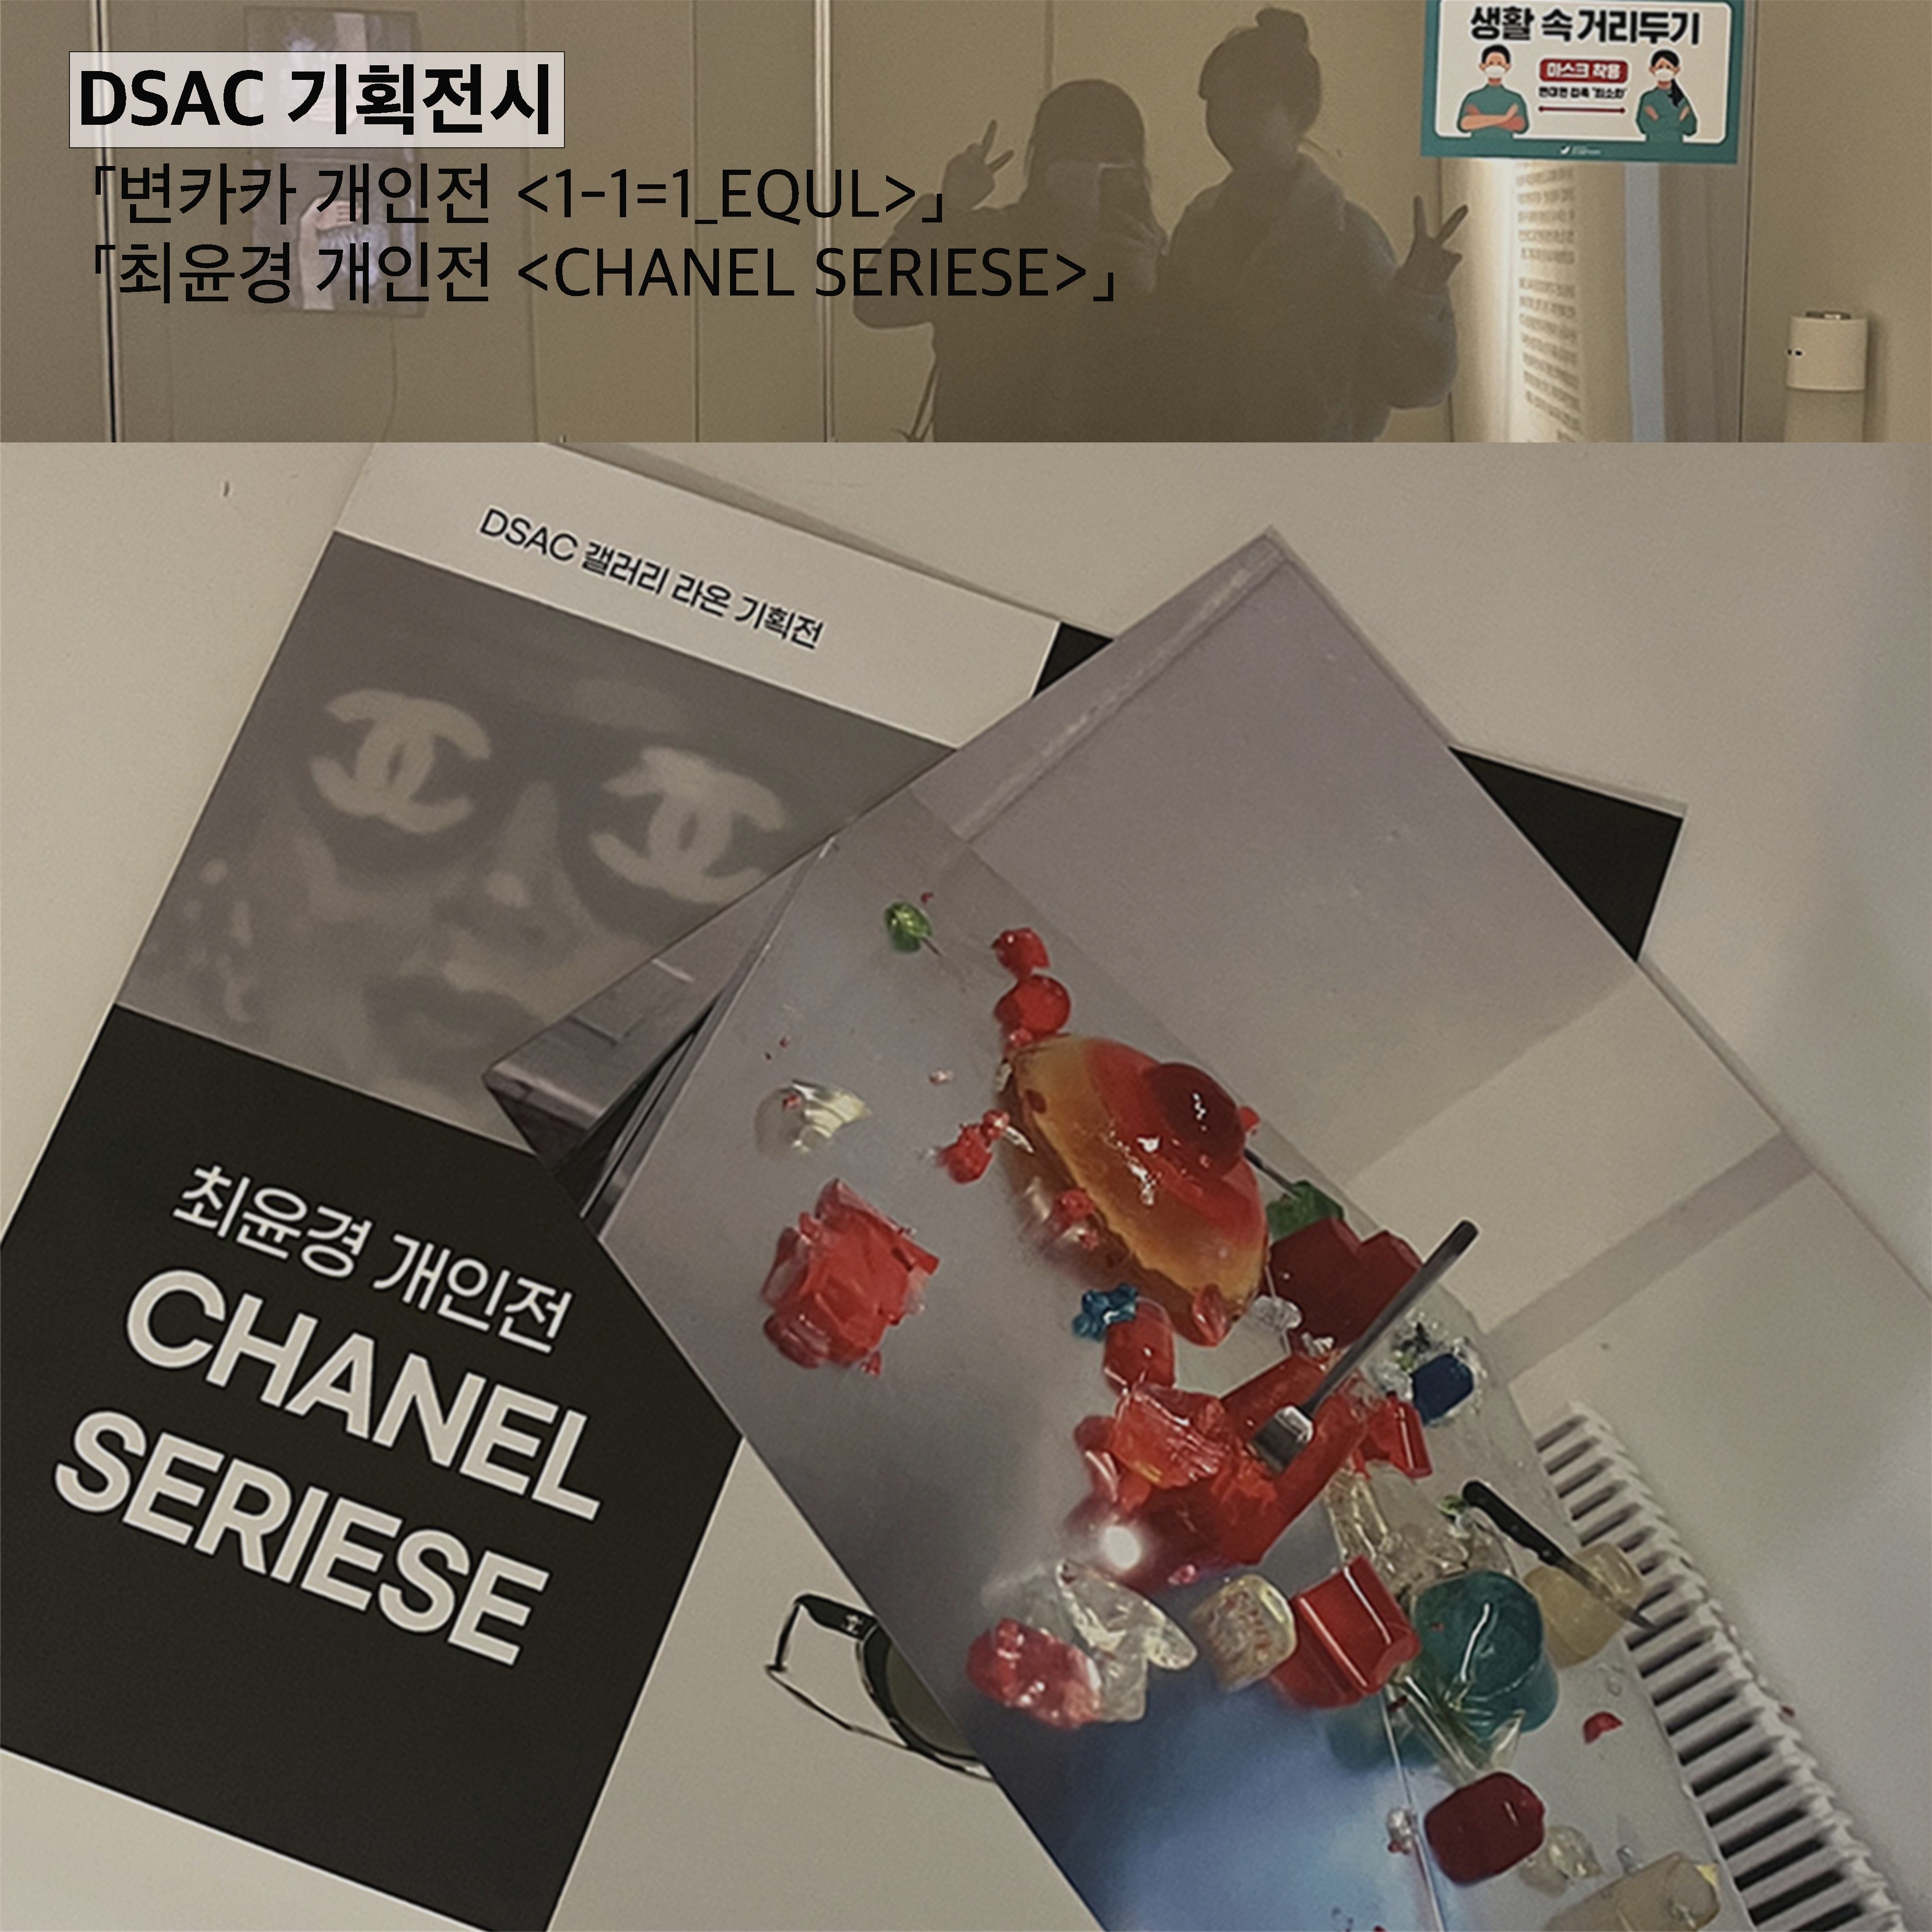 DSAC의 더 특별한  기획 전시 소개